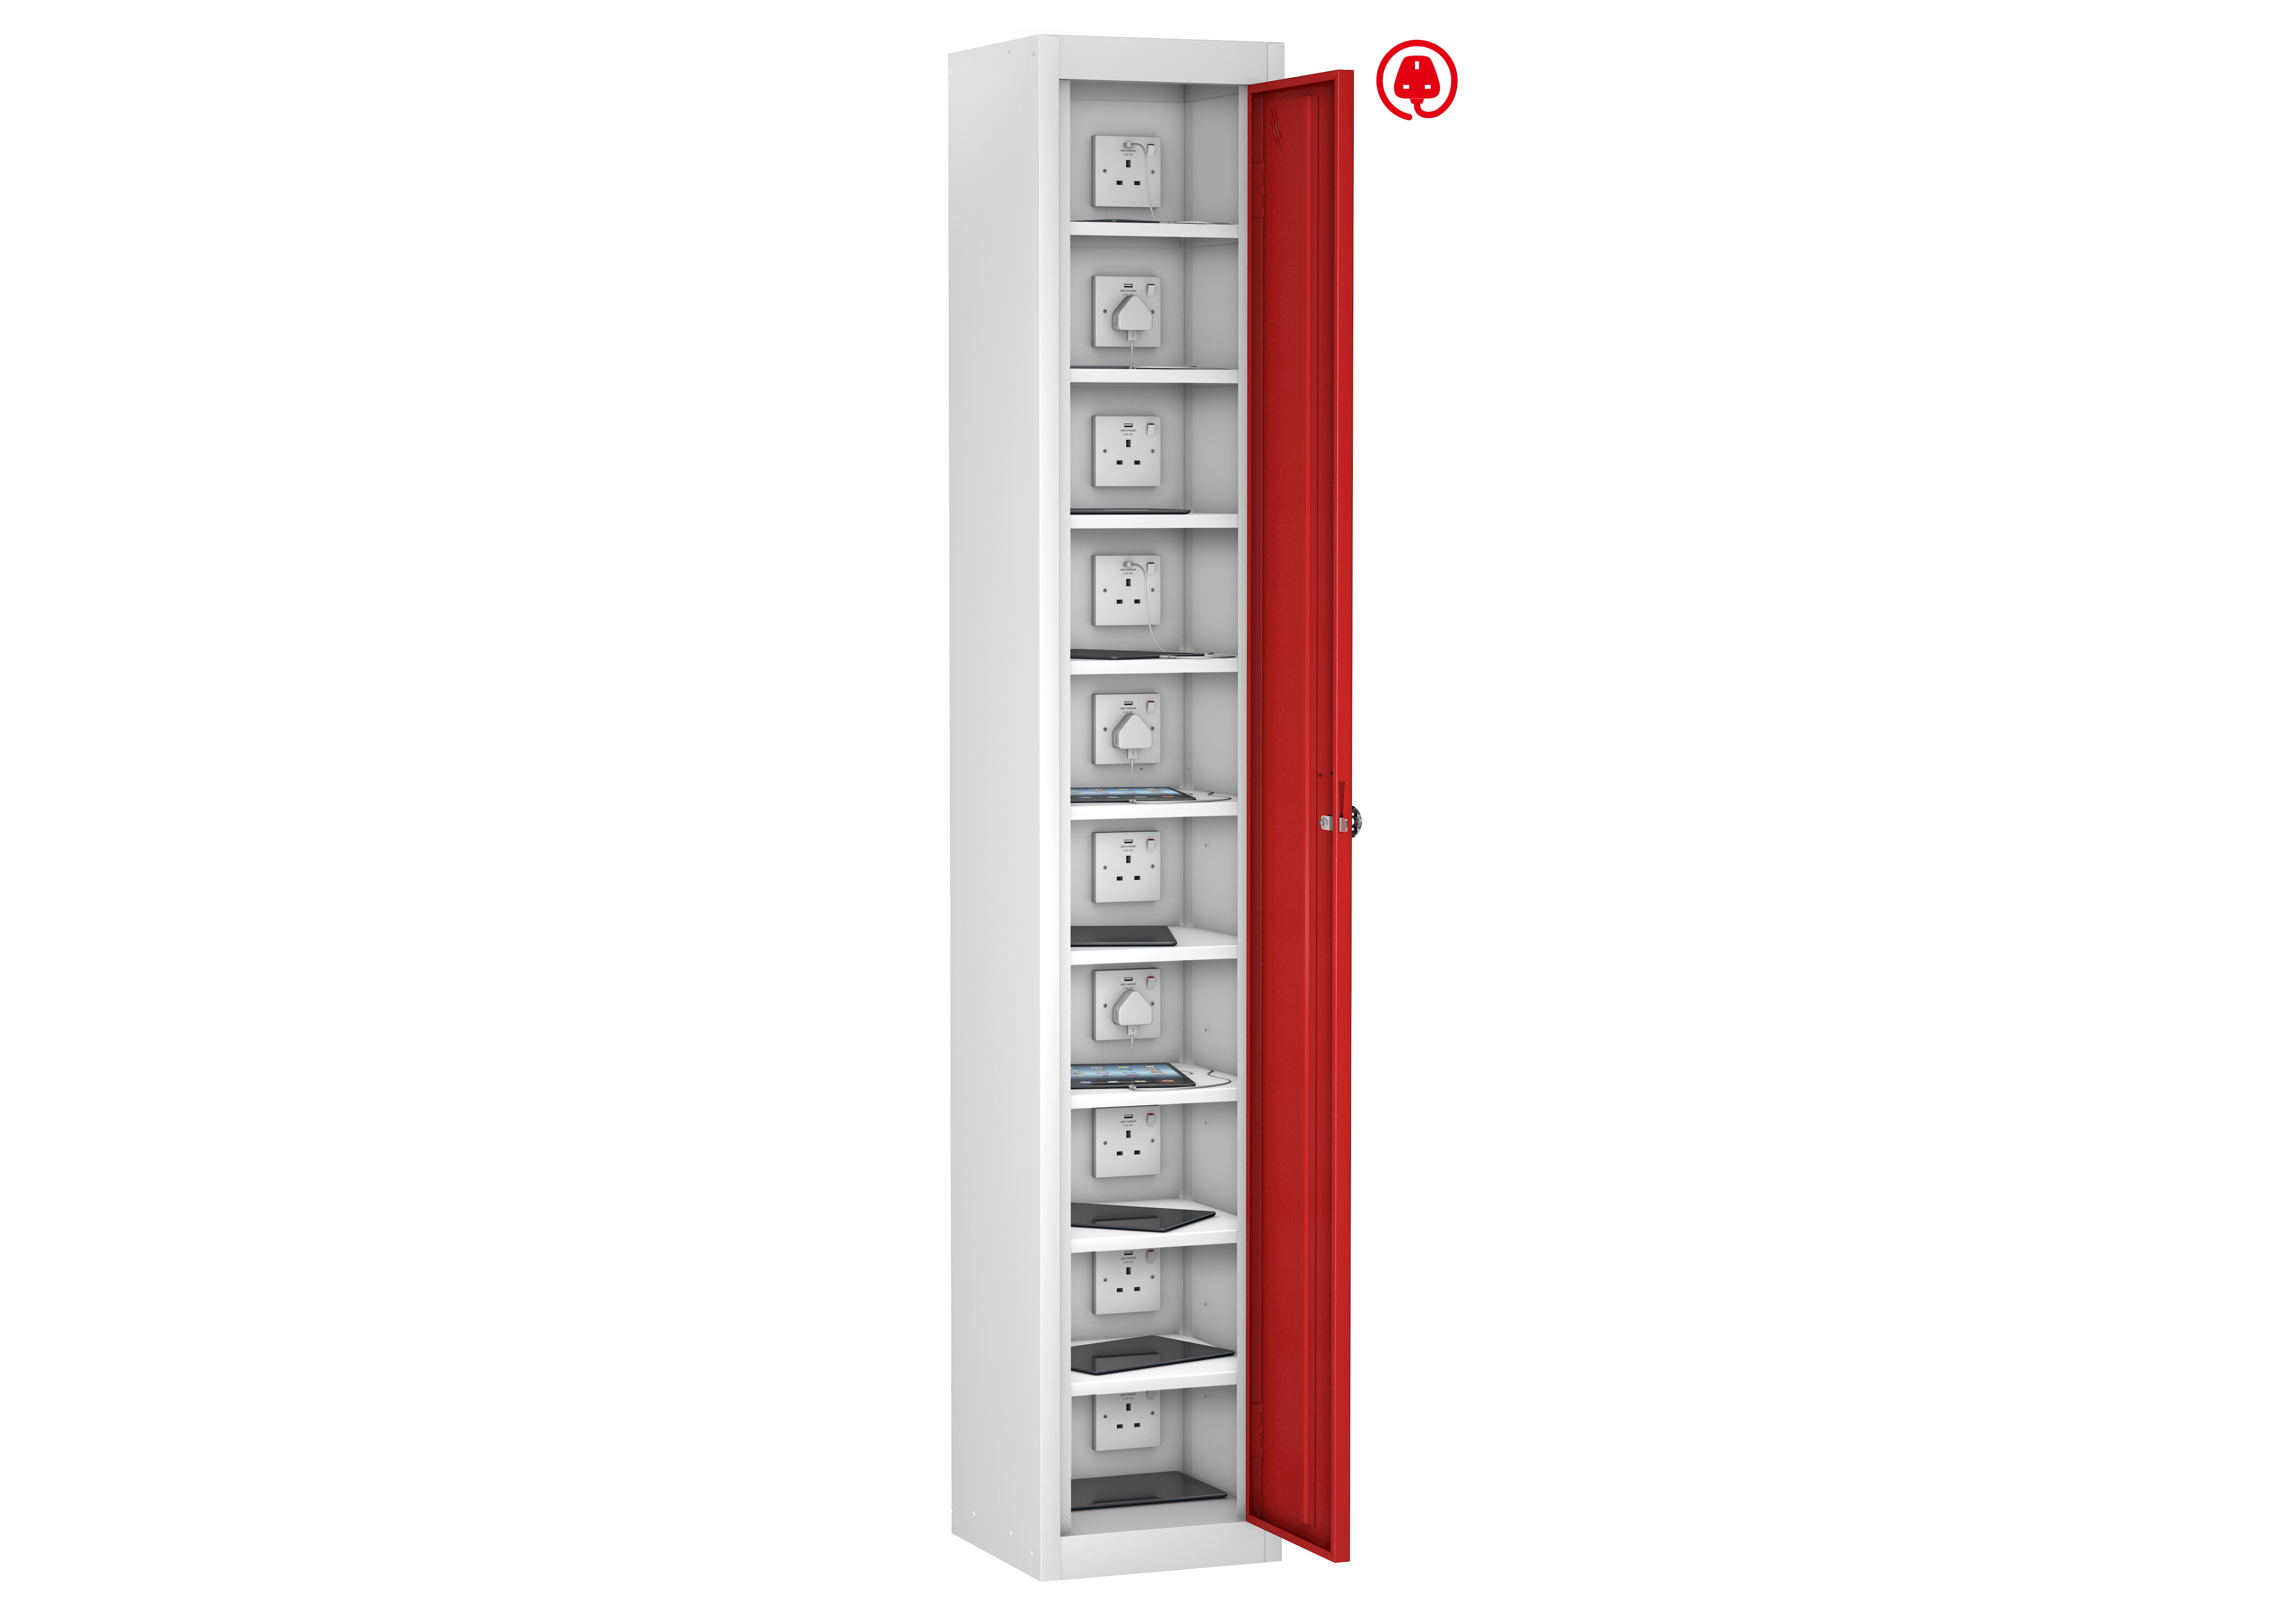 General Storage Lockers For Various Work Environments